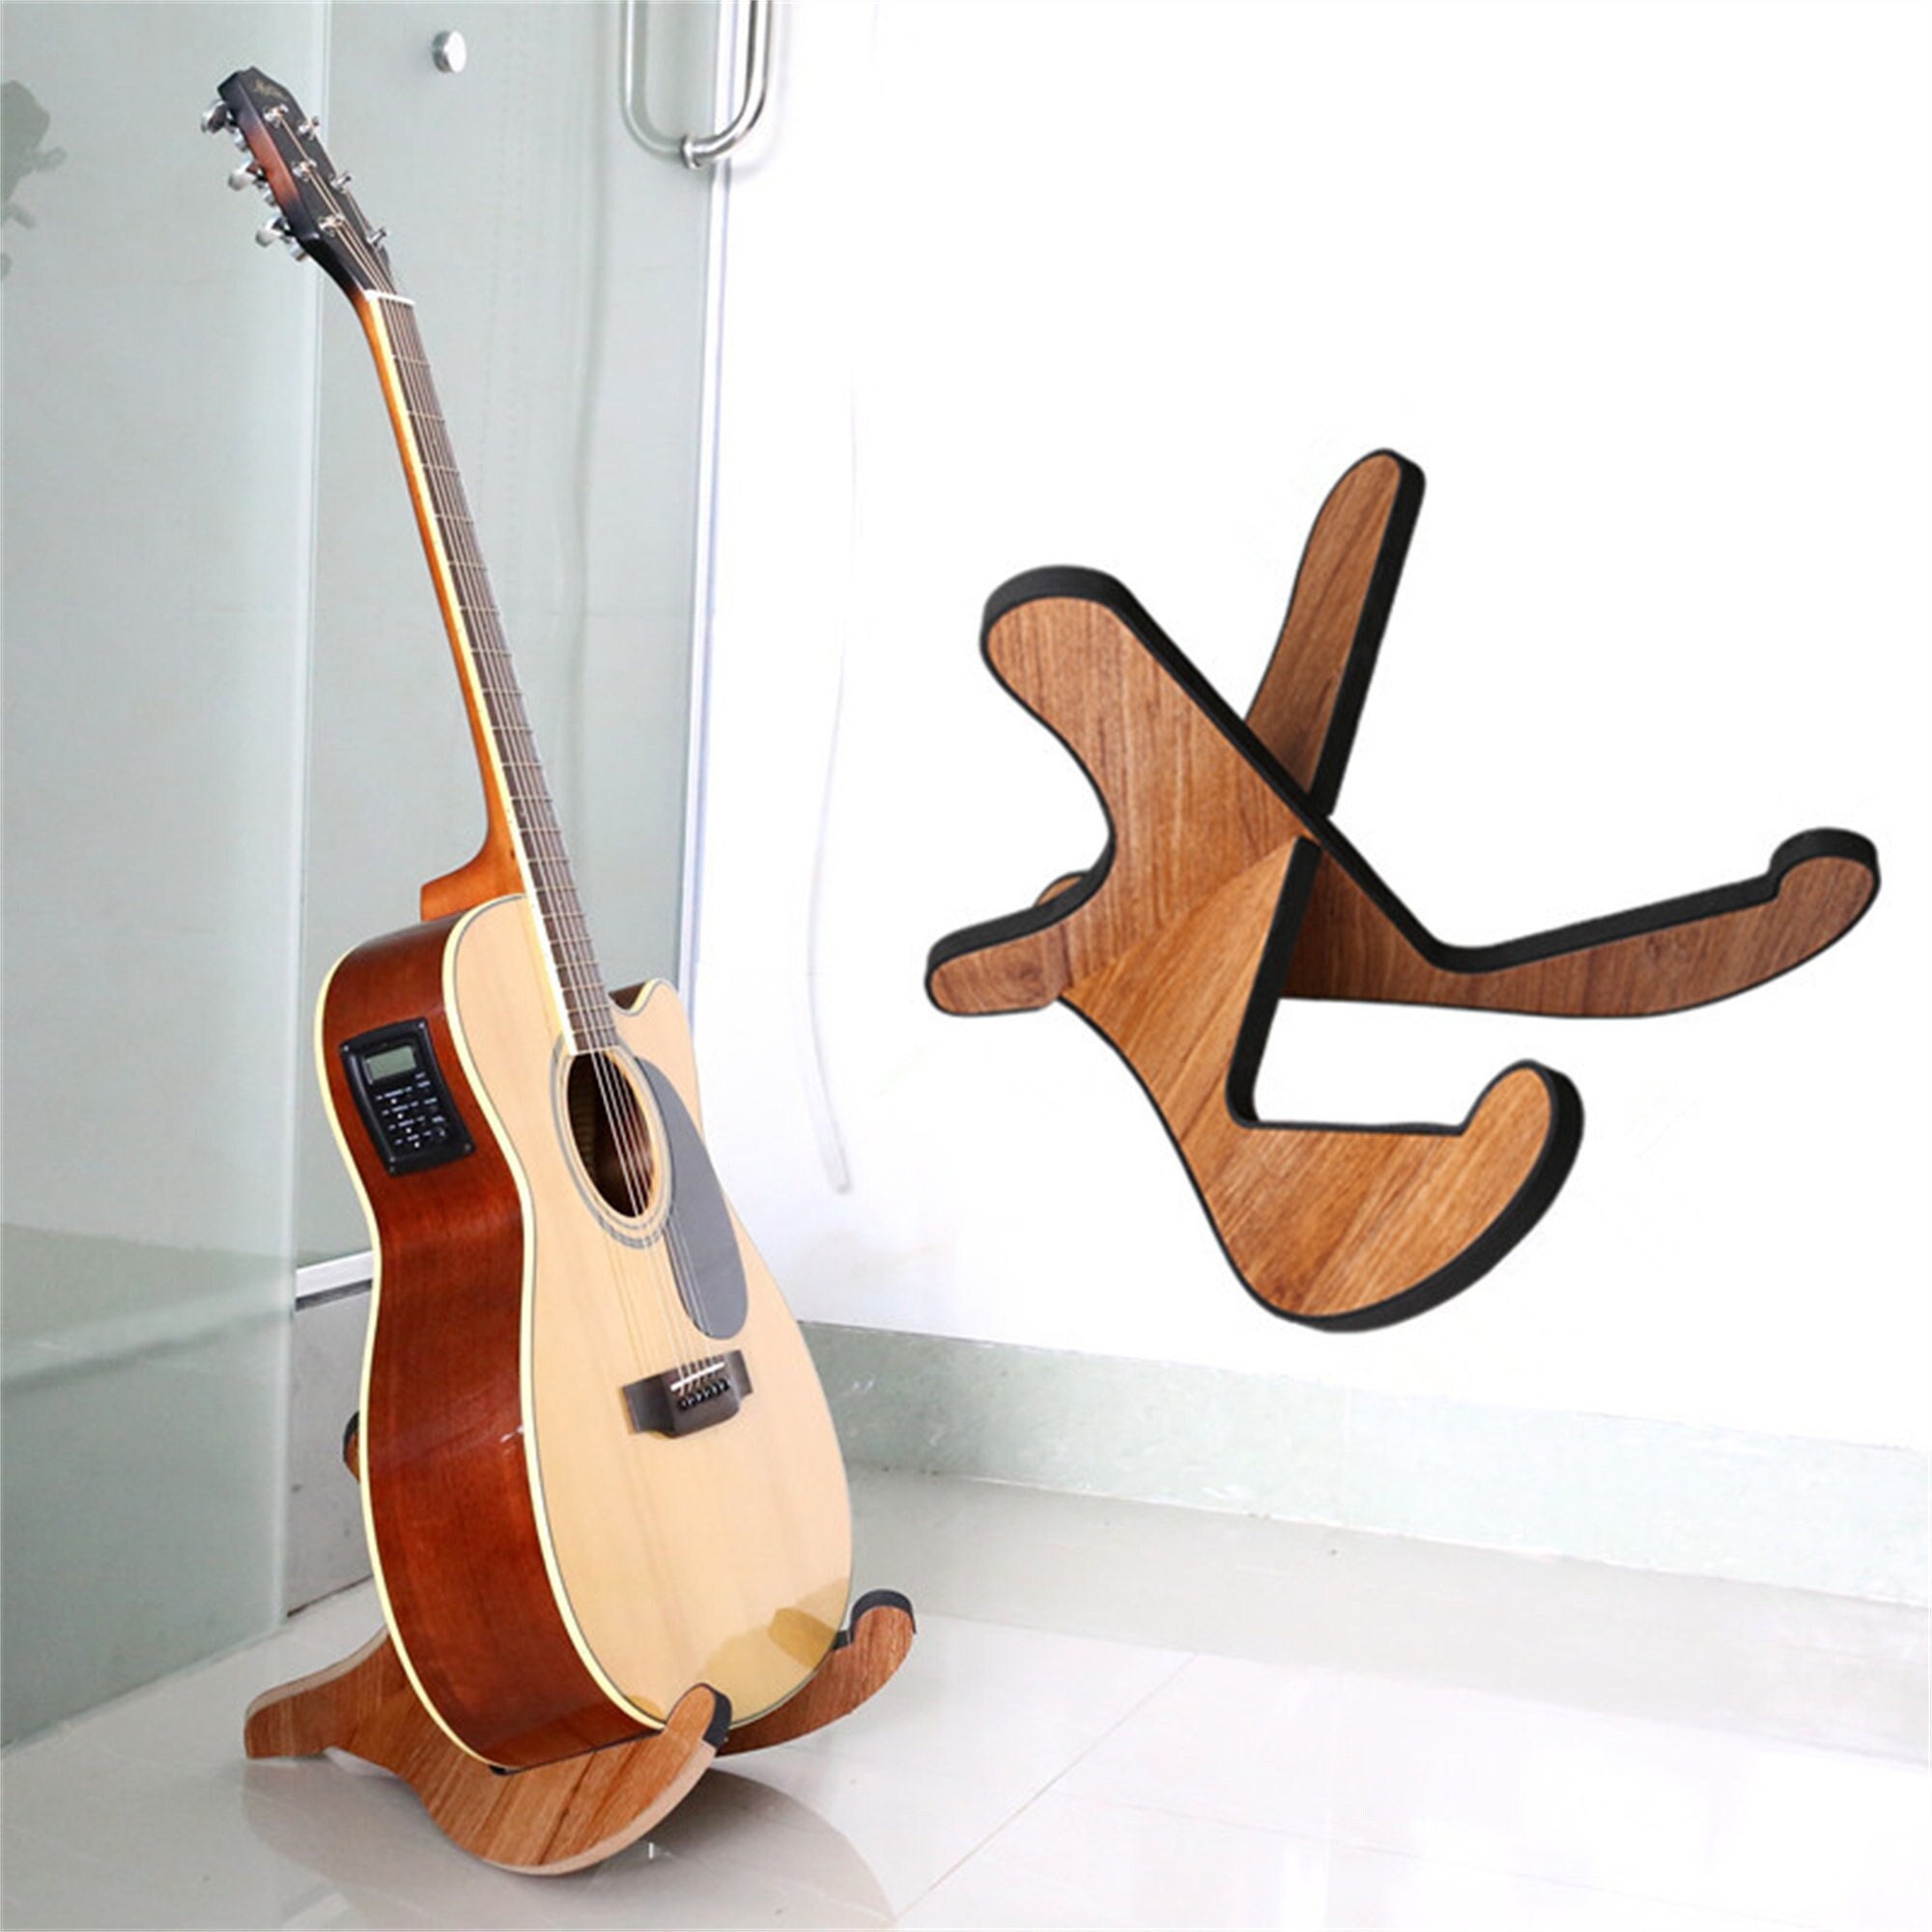 Personalised Double Guitar Stand & Plectrum Pick Holder, Birthday Gift for  Music Lovers, Teen Gift, Guitar Hanger for Two Guitars -  Denmark